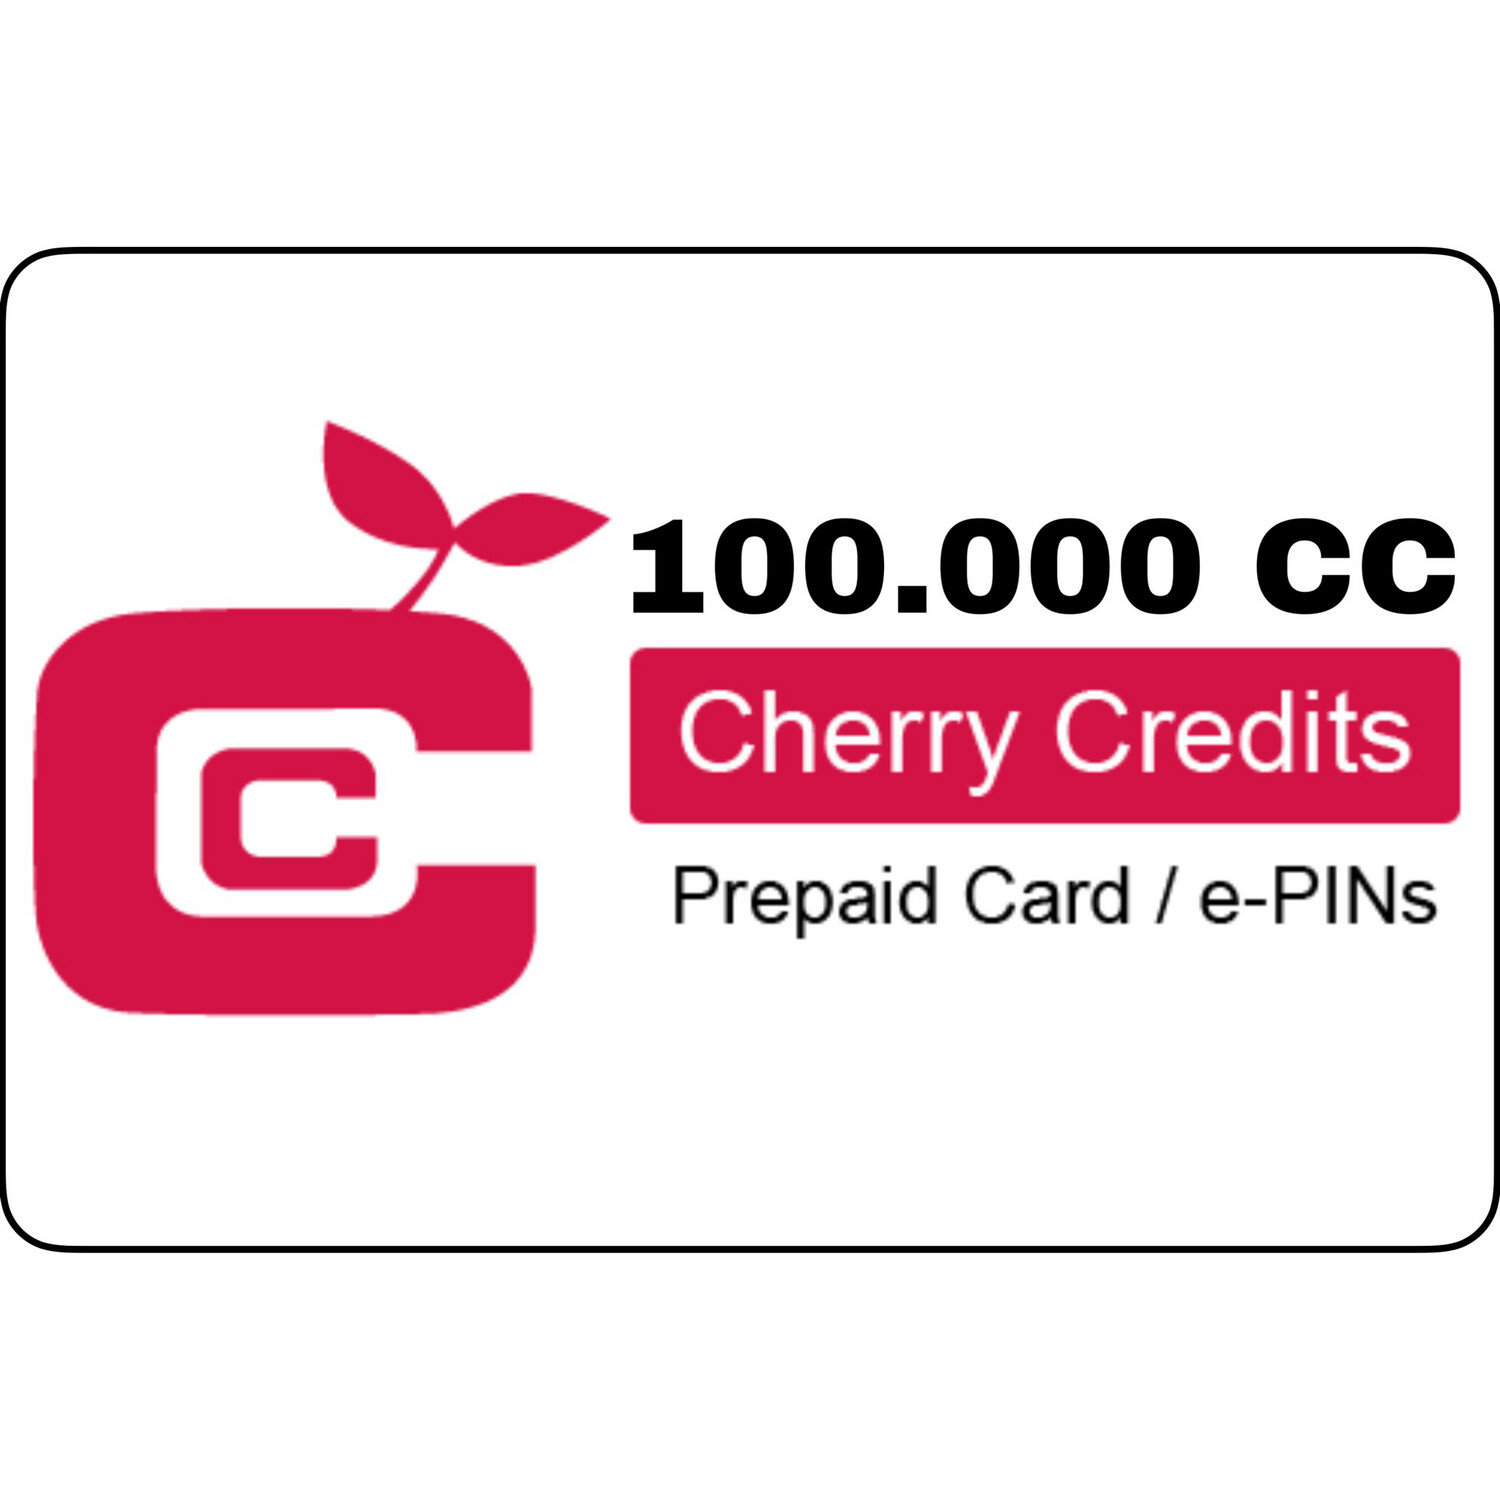 Cherry Credits 100.000 CC Global